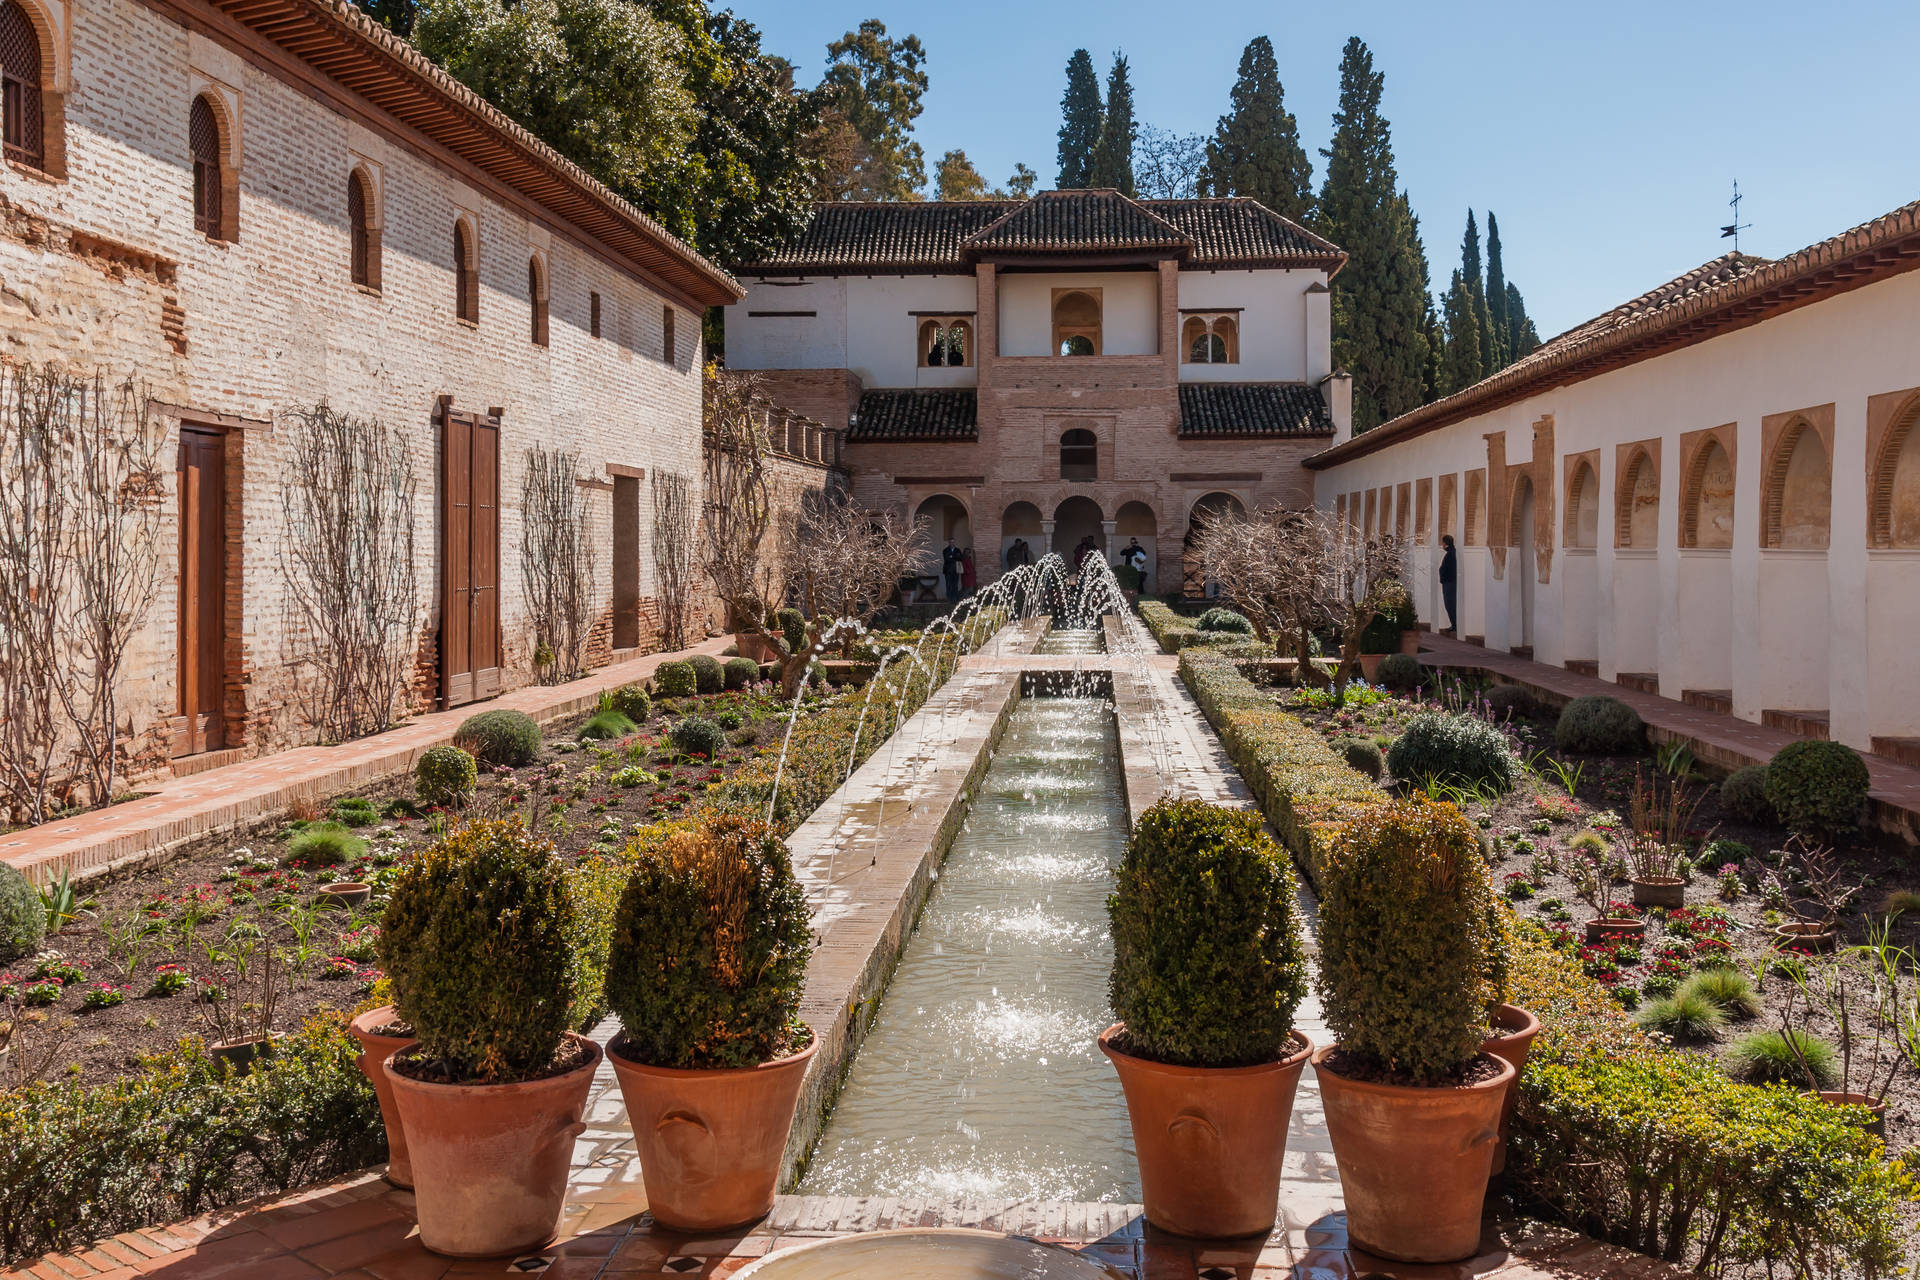 Alhambra Generalife Potted Plants Wallpaper